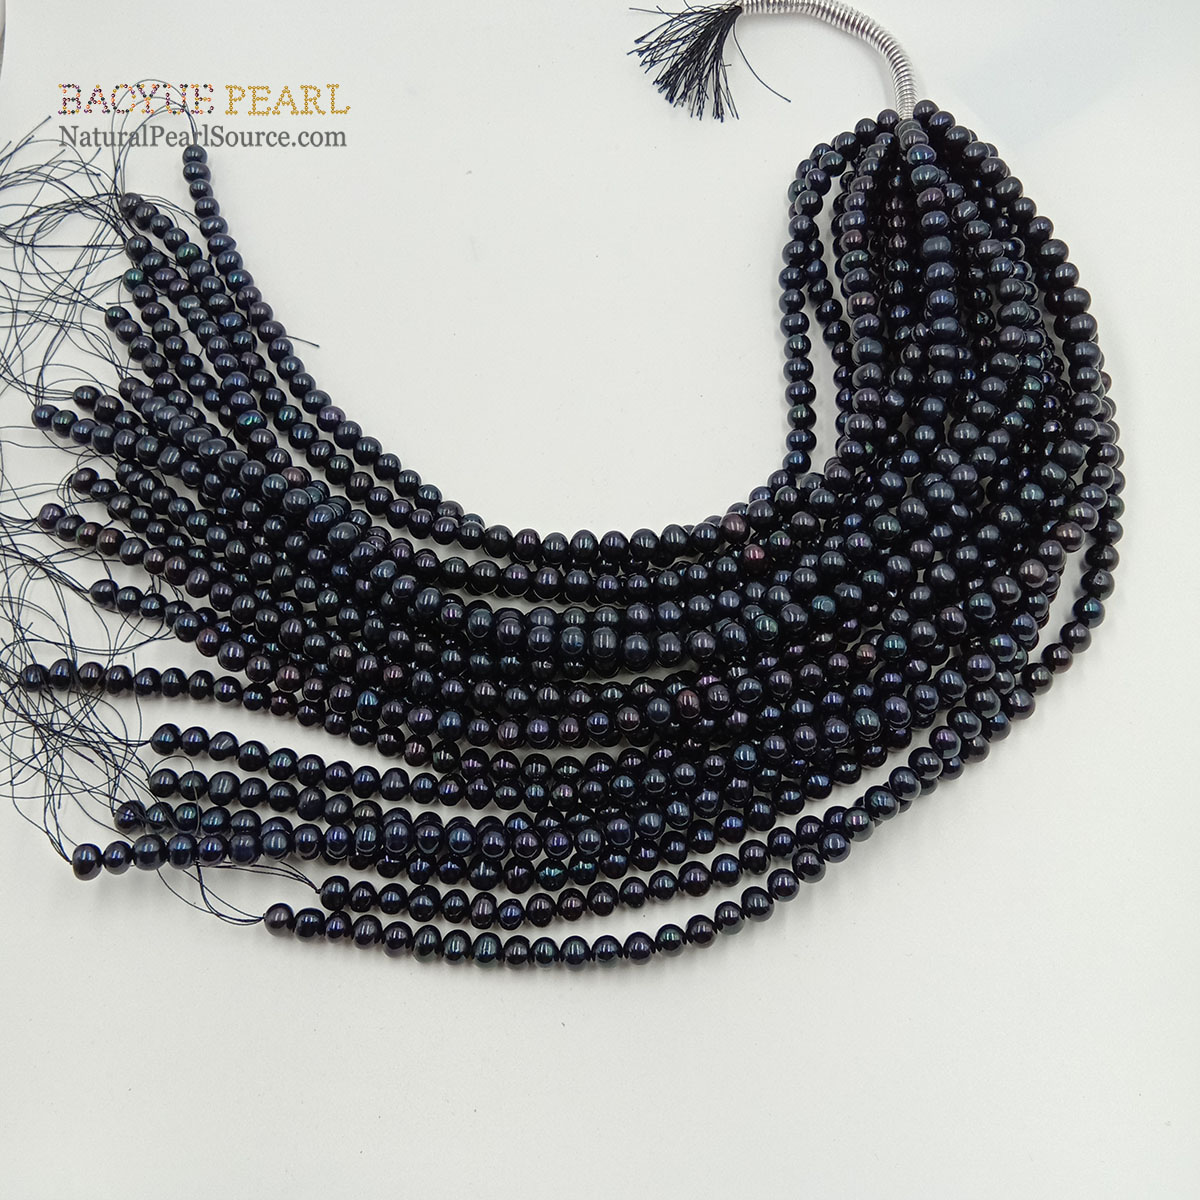 8-9 mm Black round loose pearls wholesale freshwater pearl in strand 16 inch black pearls wholesale 